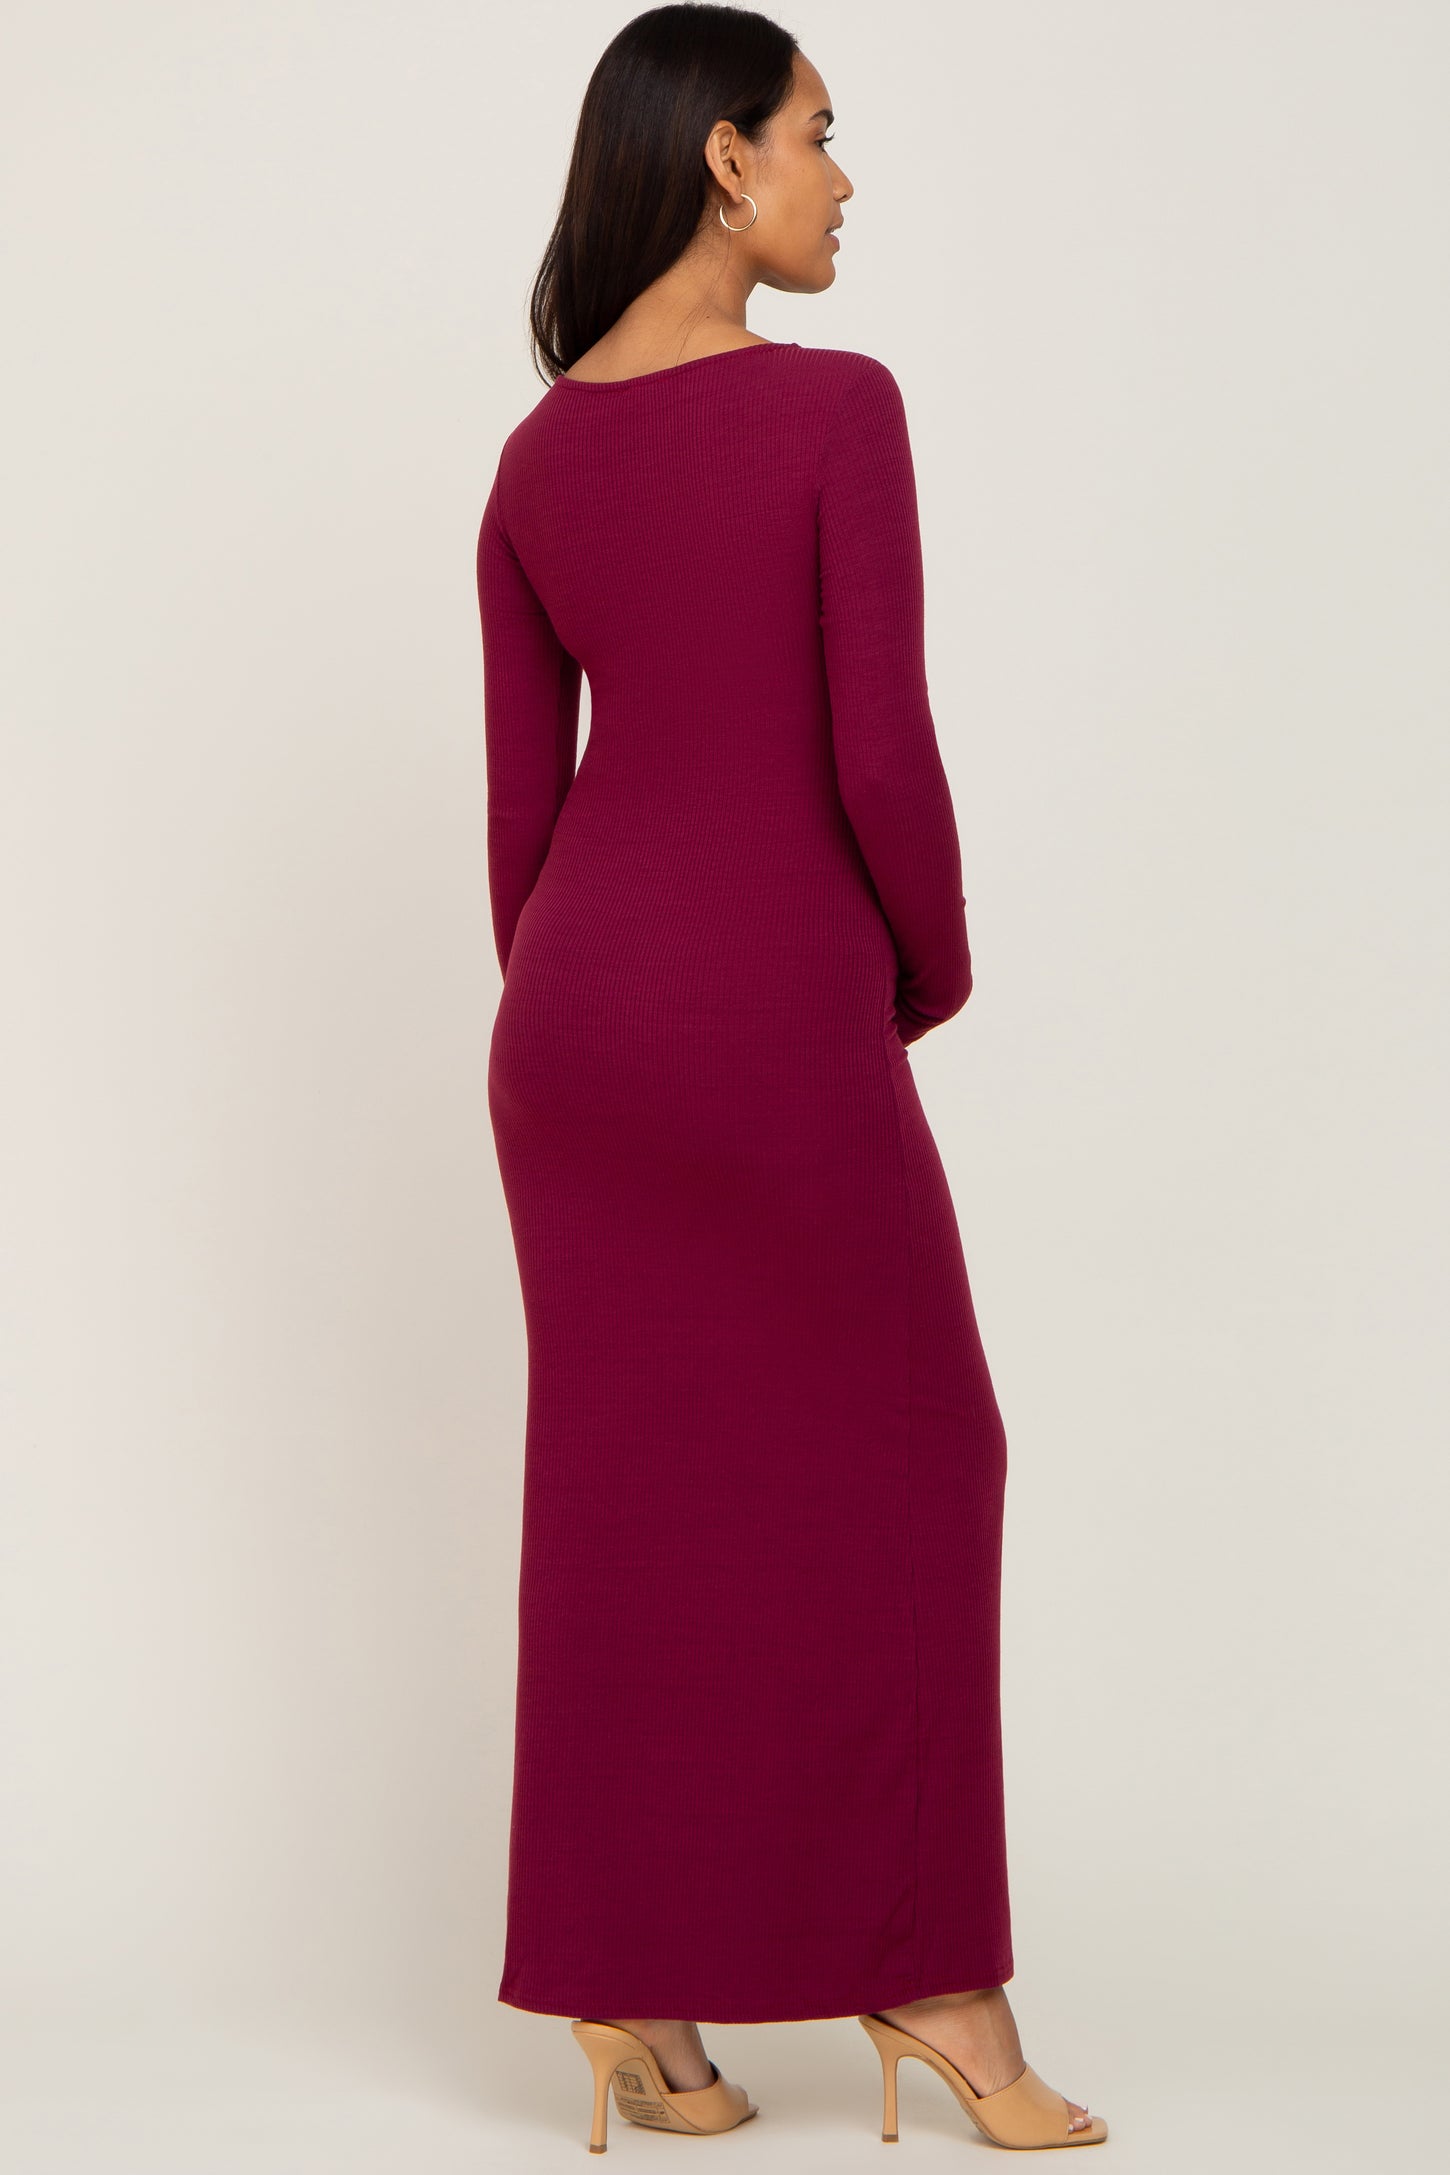 PinkBlush Burgundy Solid Off Shoulder Maternity Maxi Dress